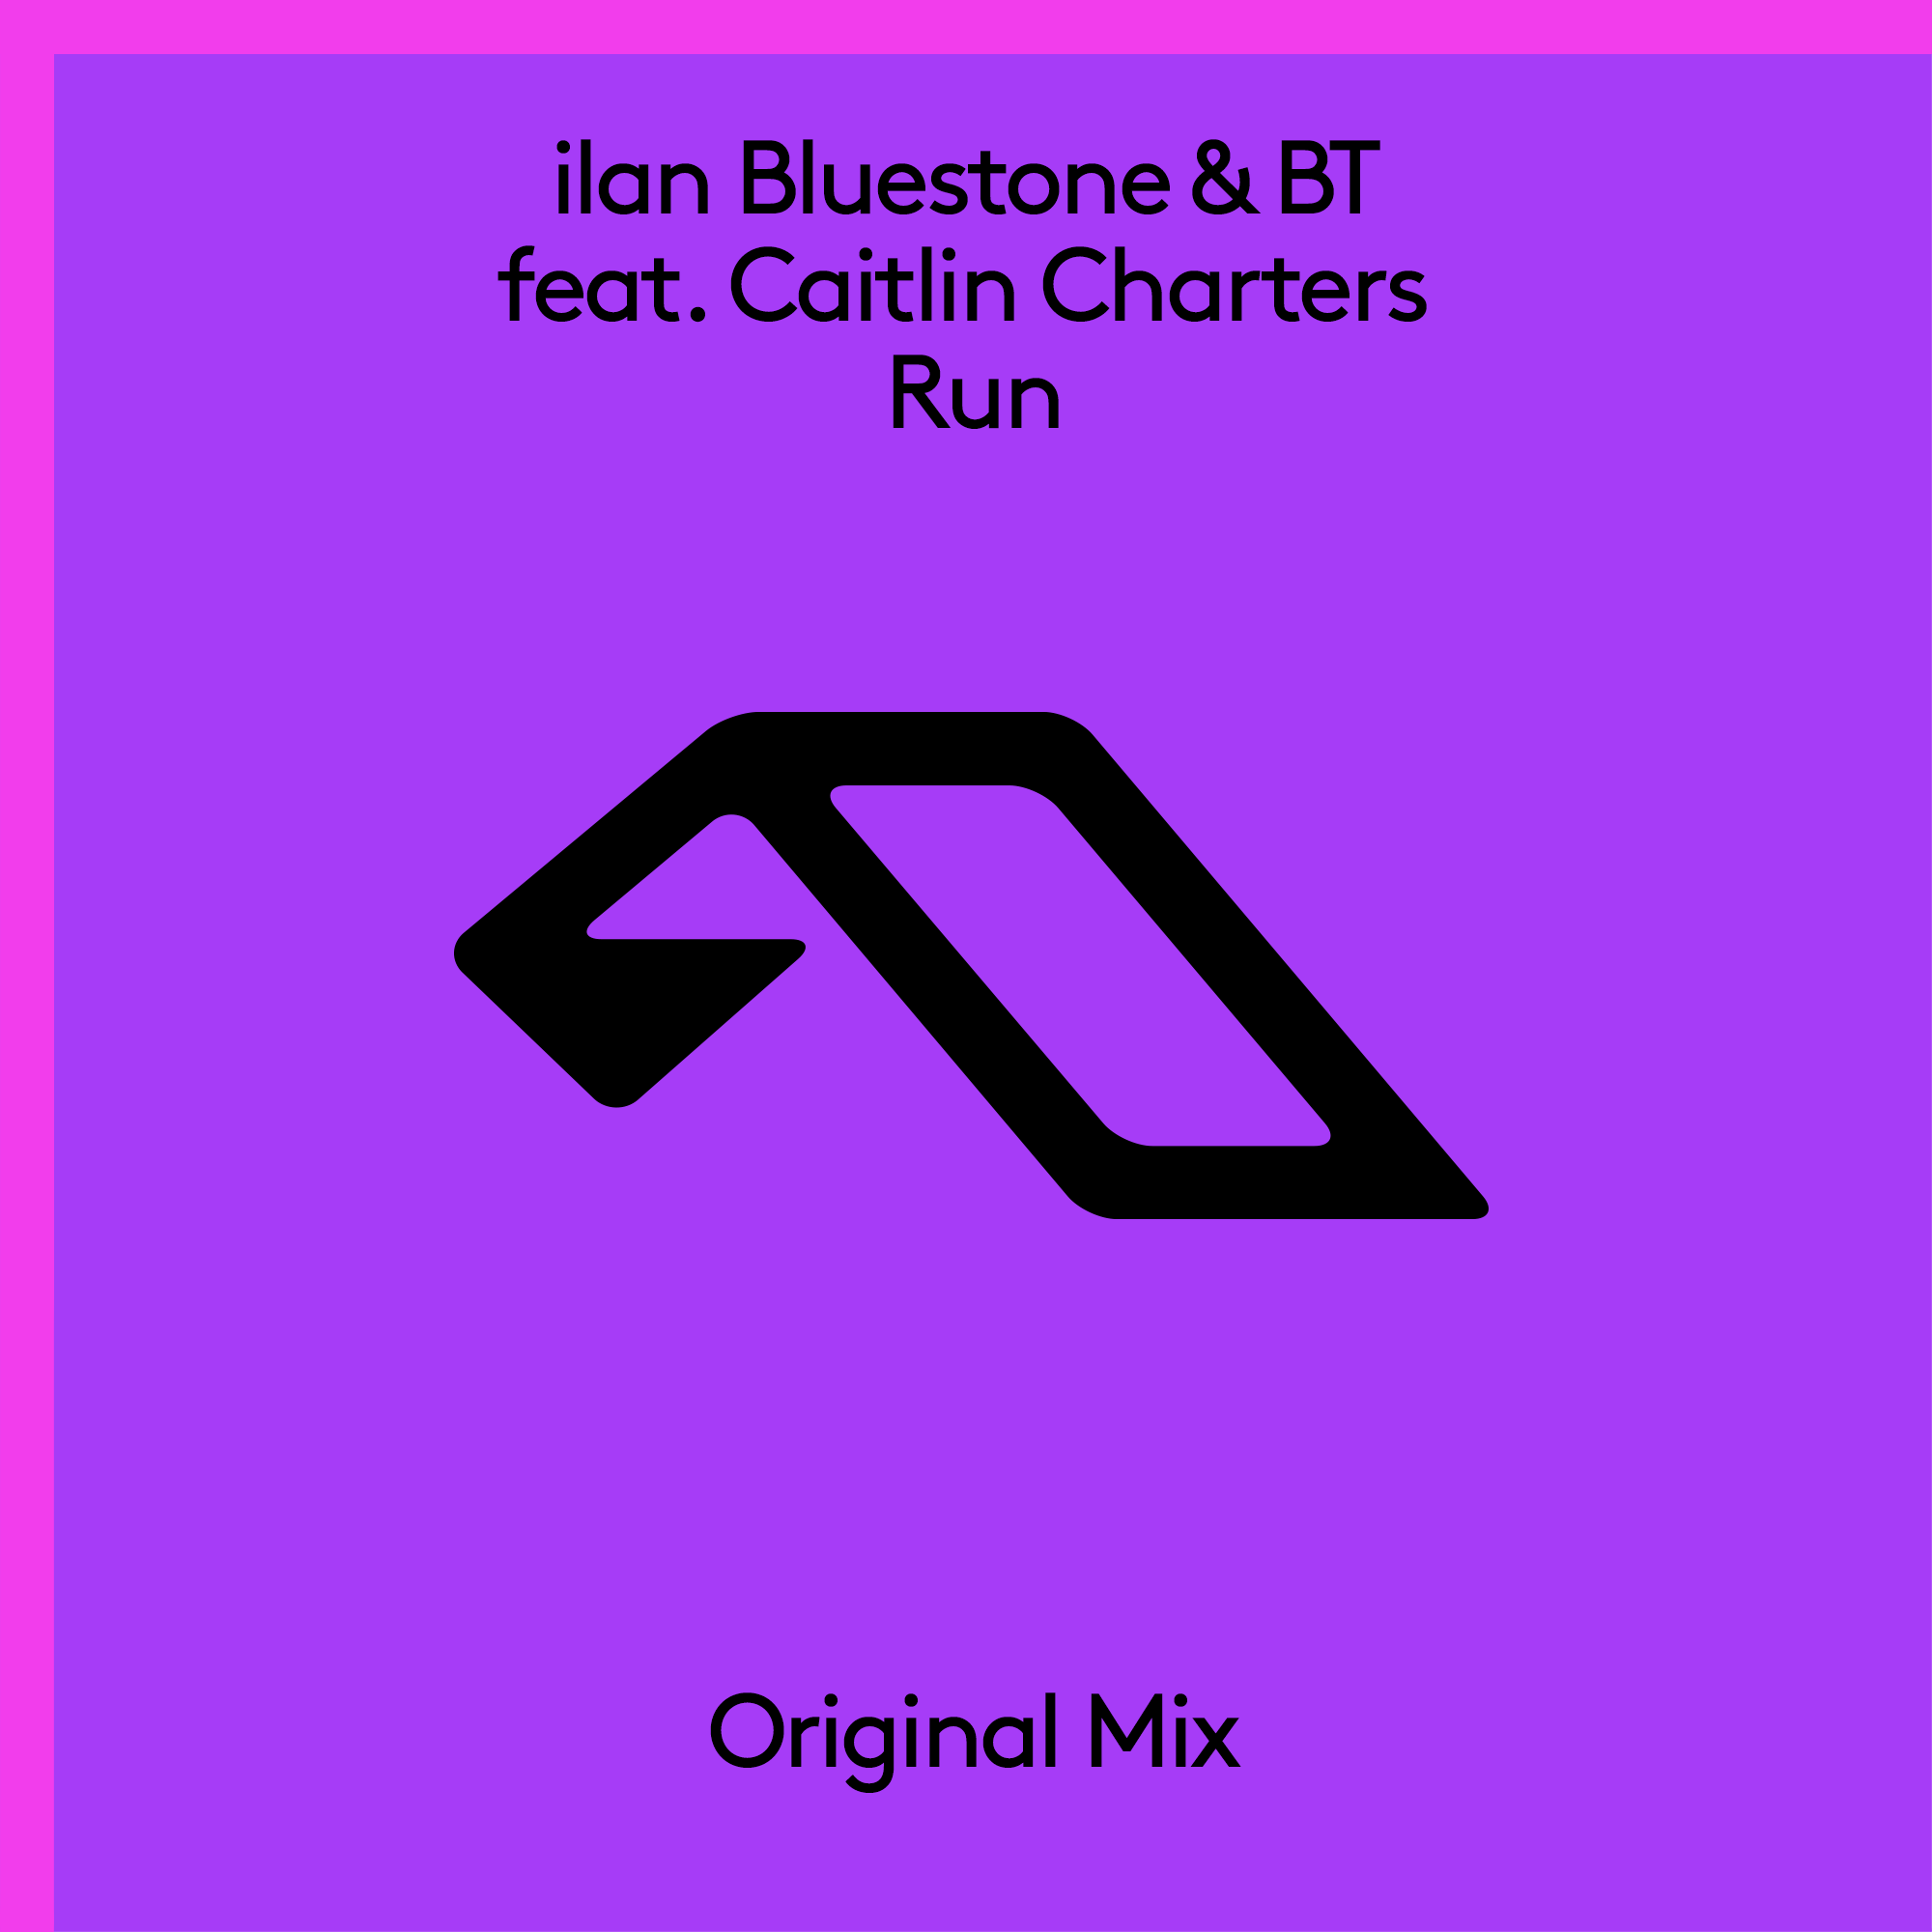 ilan Bluestone & BT ft. featuring Caitlin Charters Run cover artwork